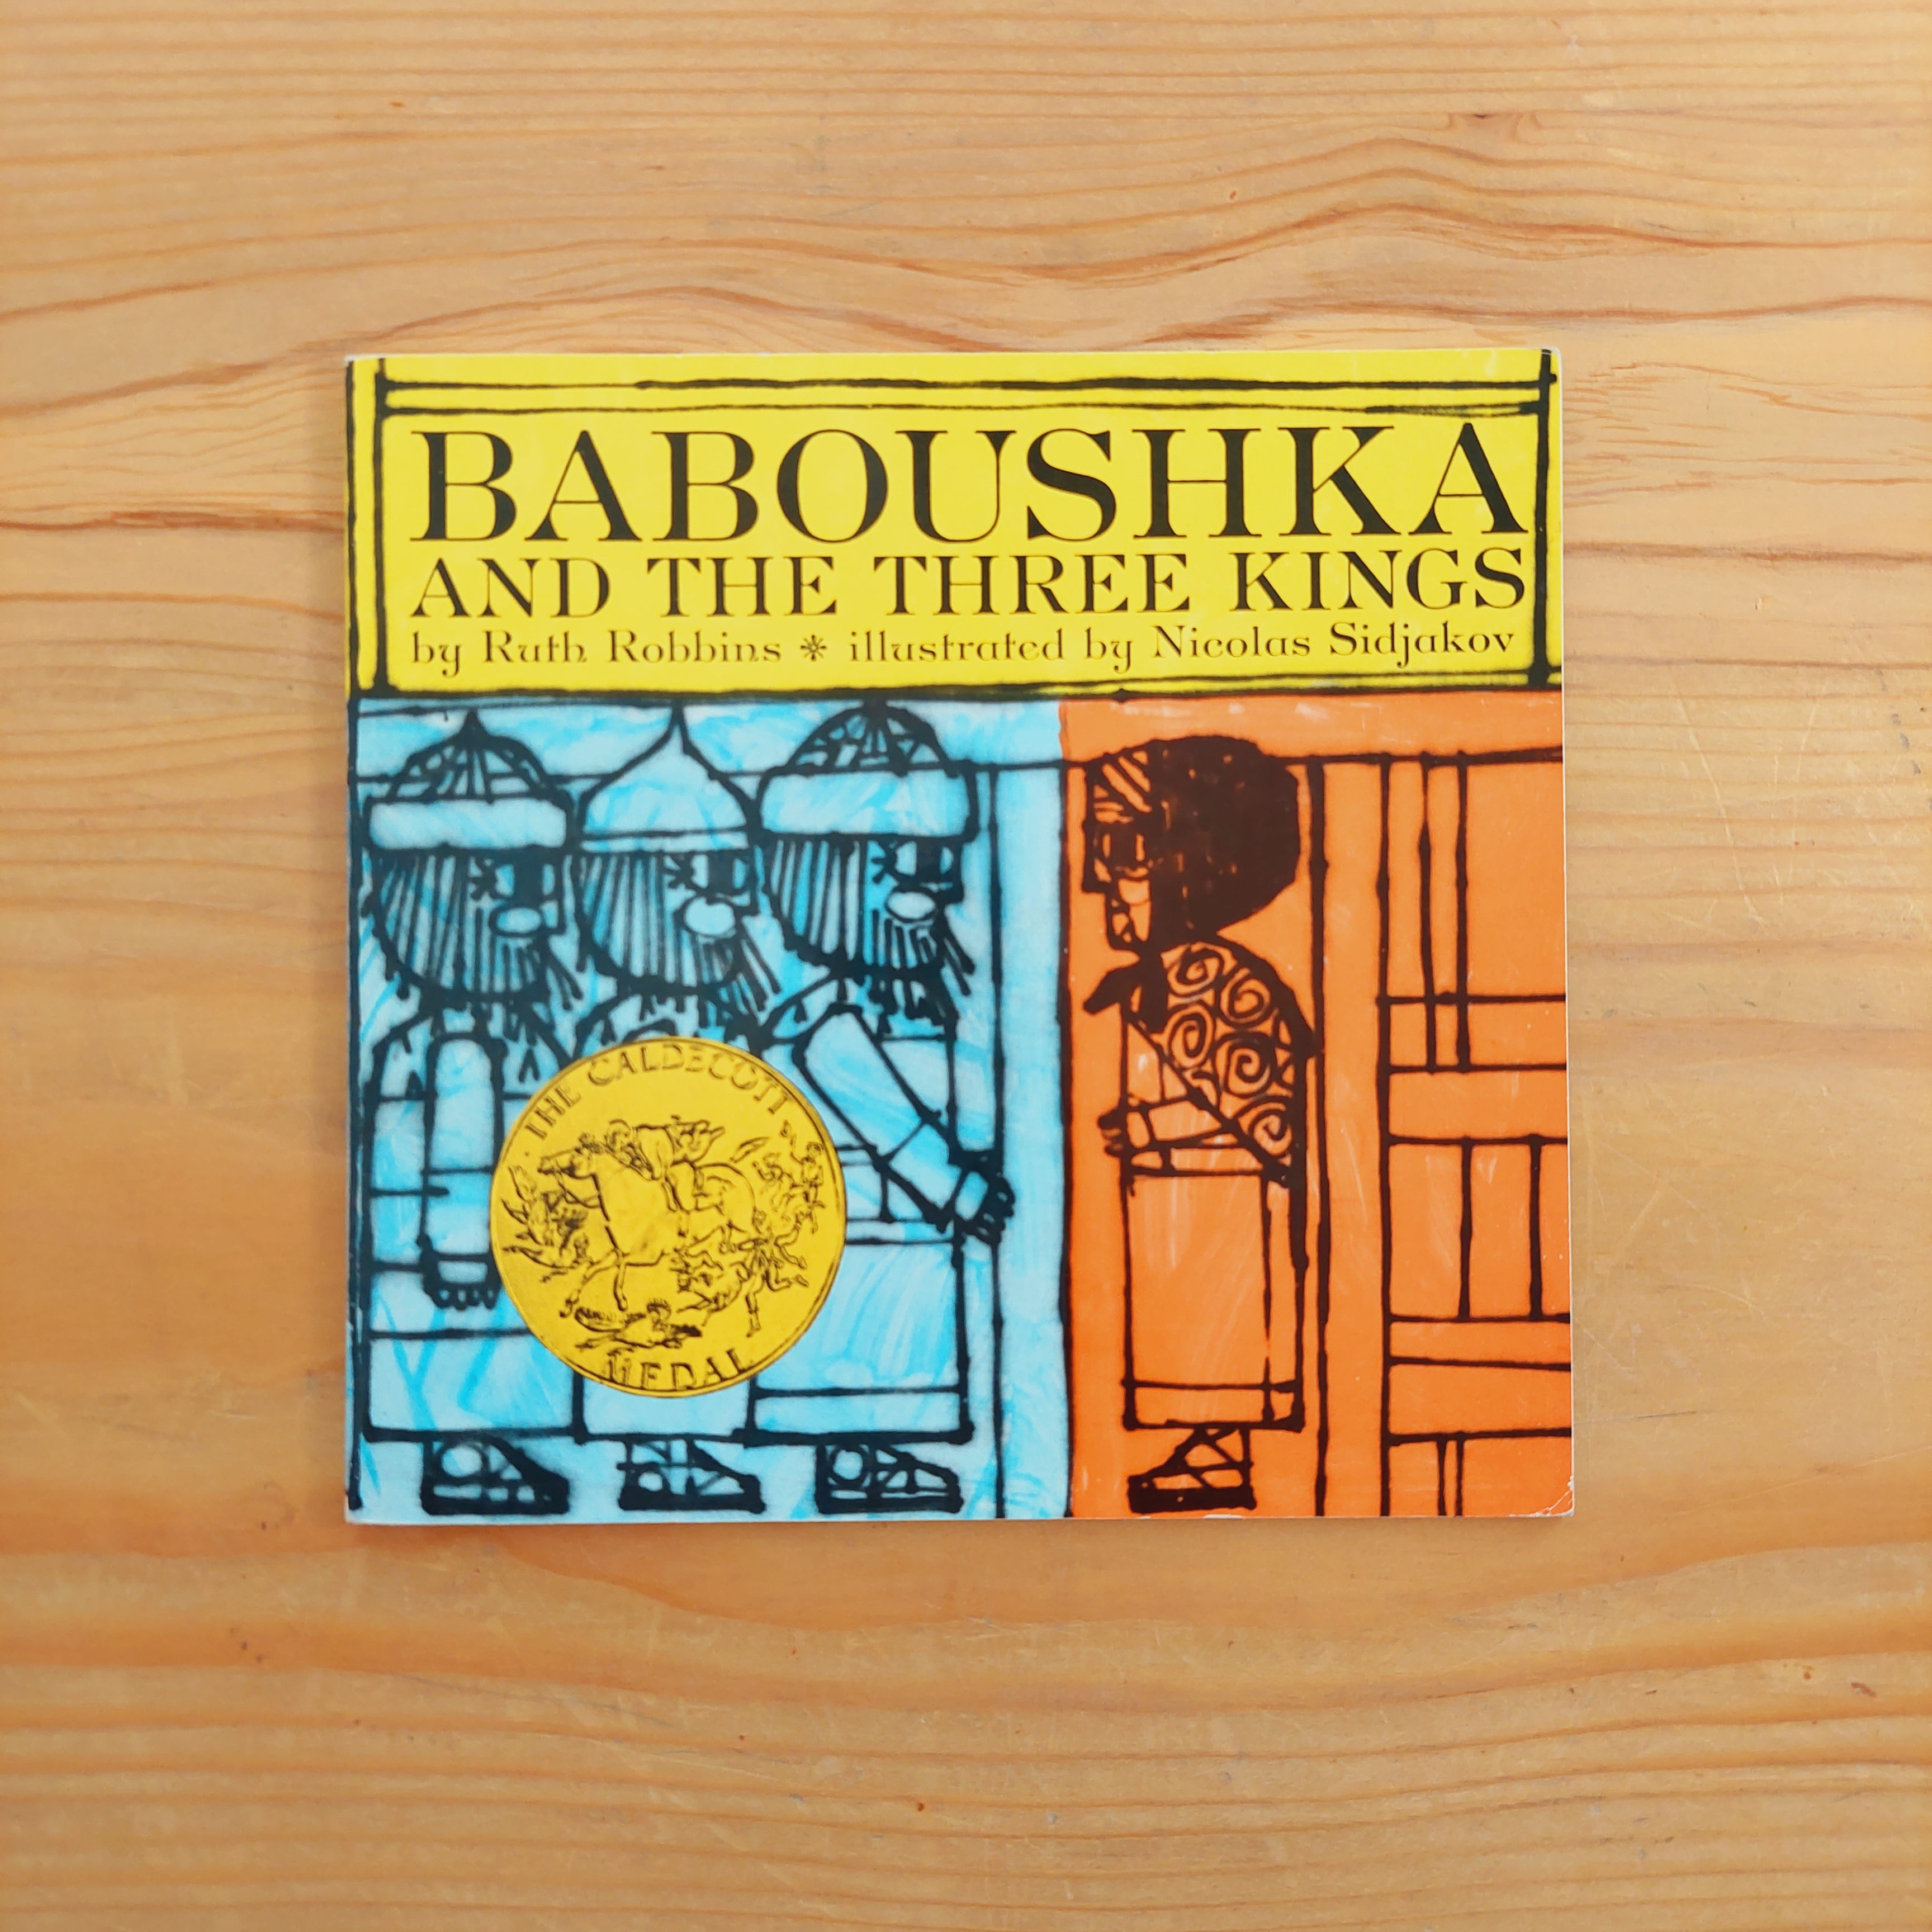 Baboushka and the Three Kings – Childhood Ink